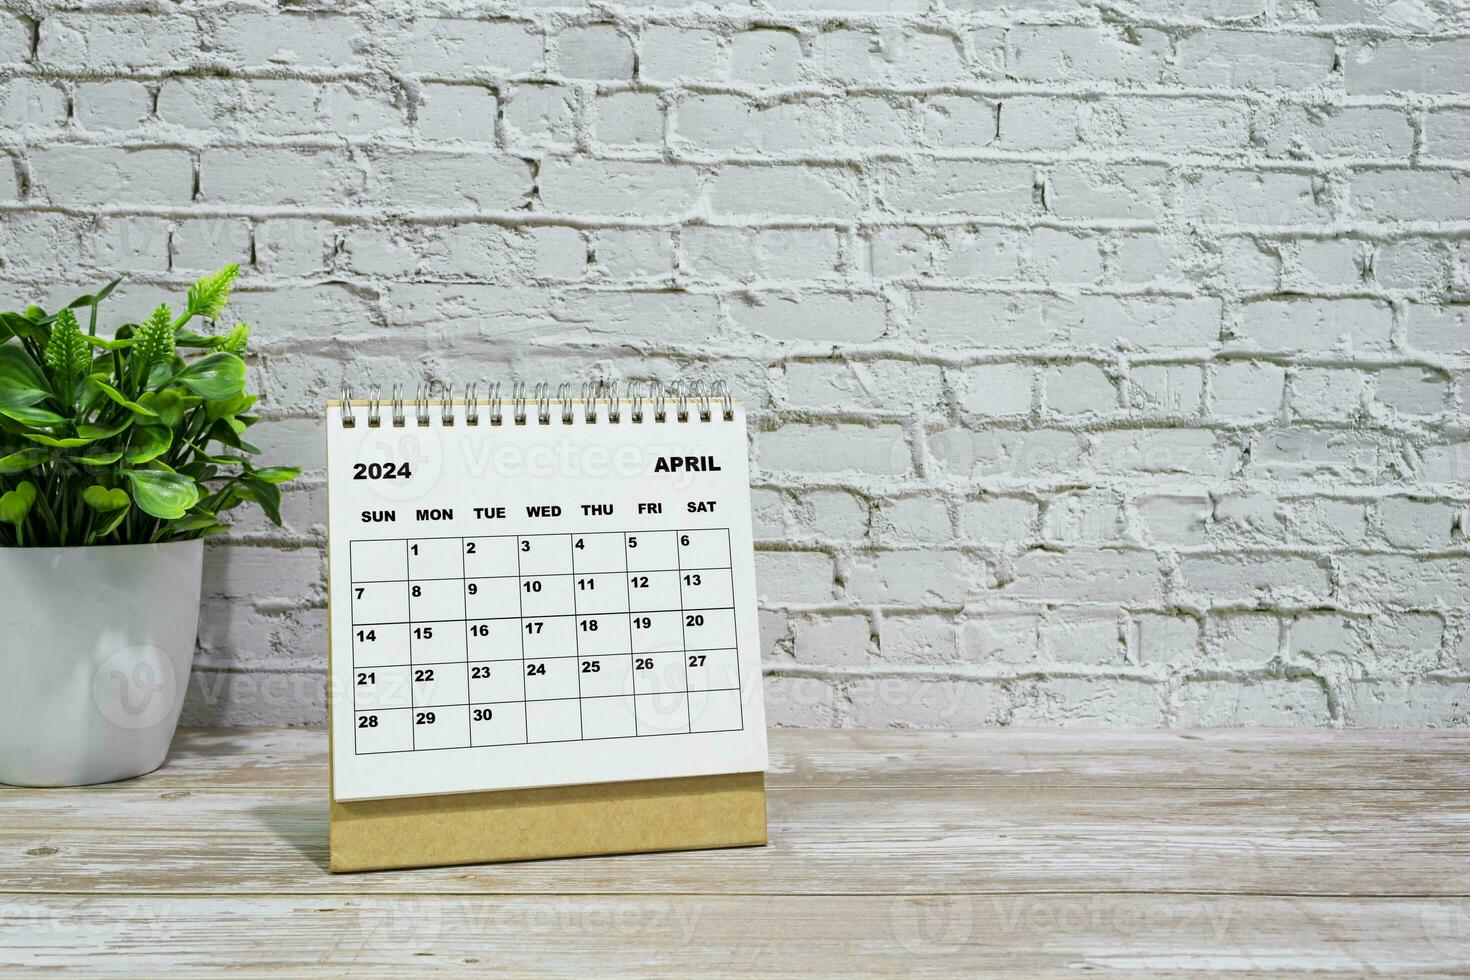 blanco abril 2024 calendario en oficina de madera escritorio con en conserva planta. foto